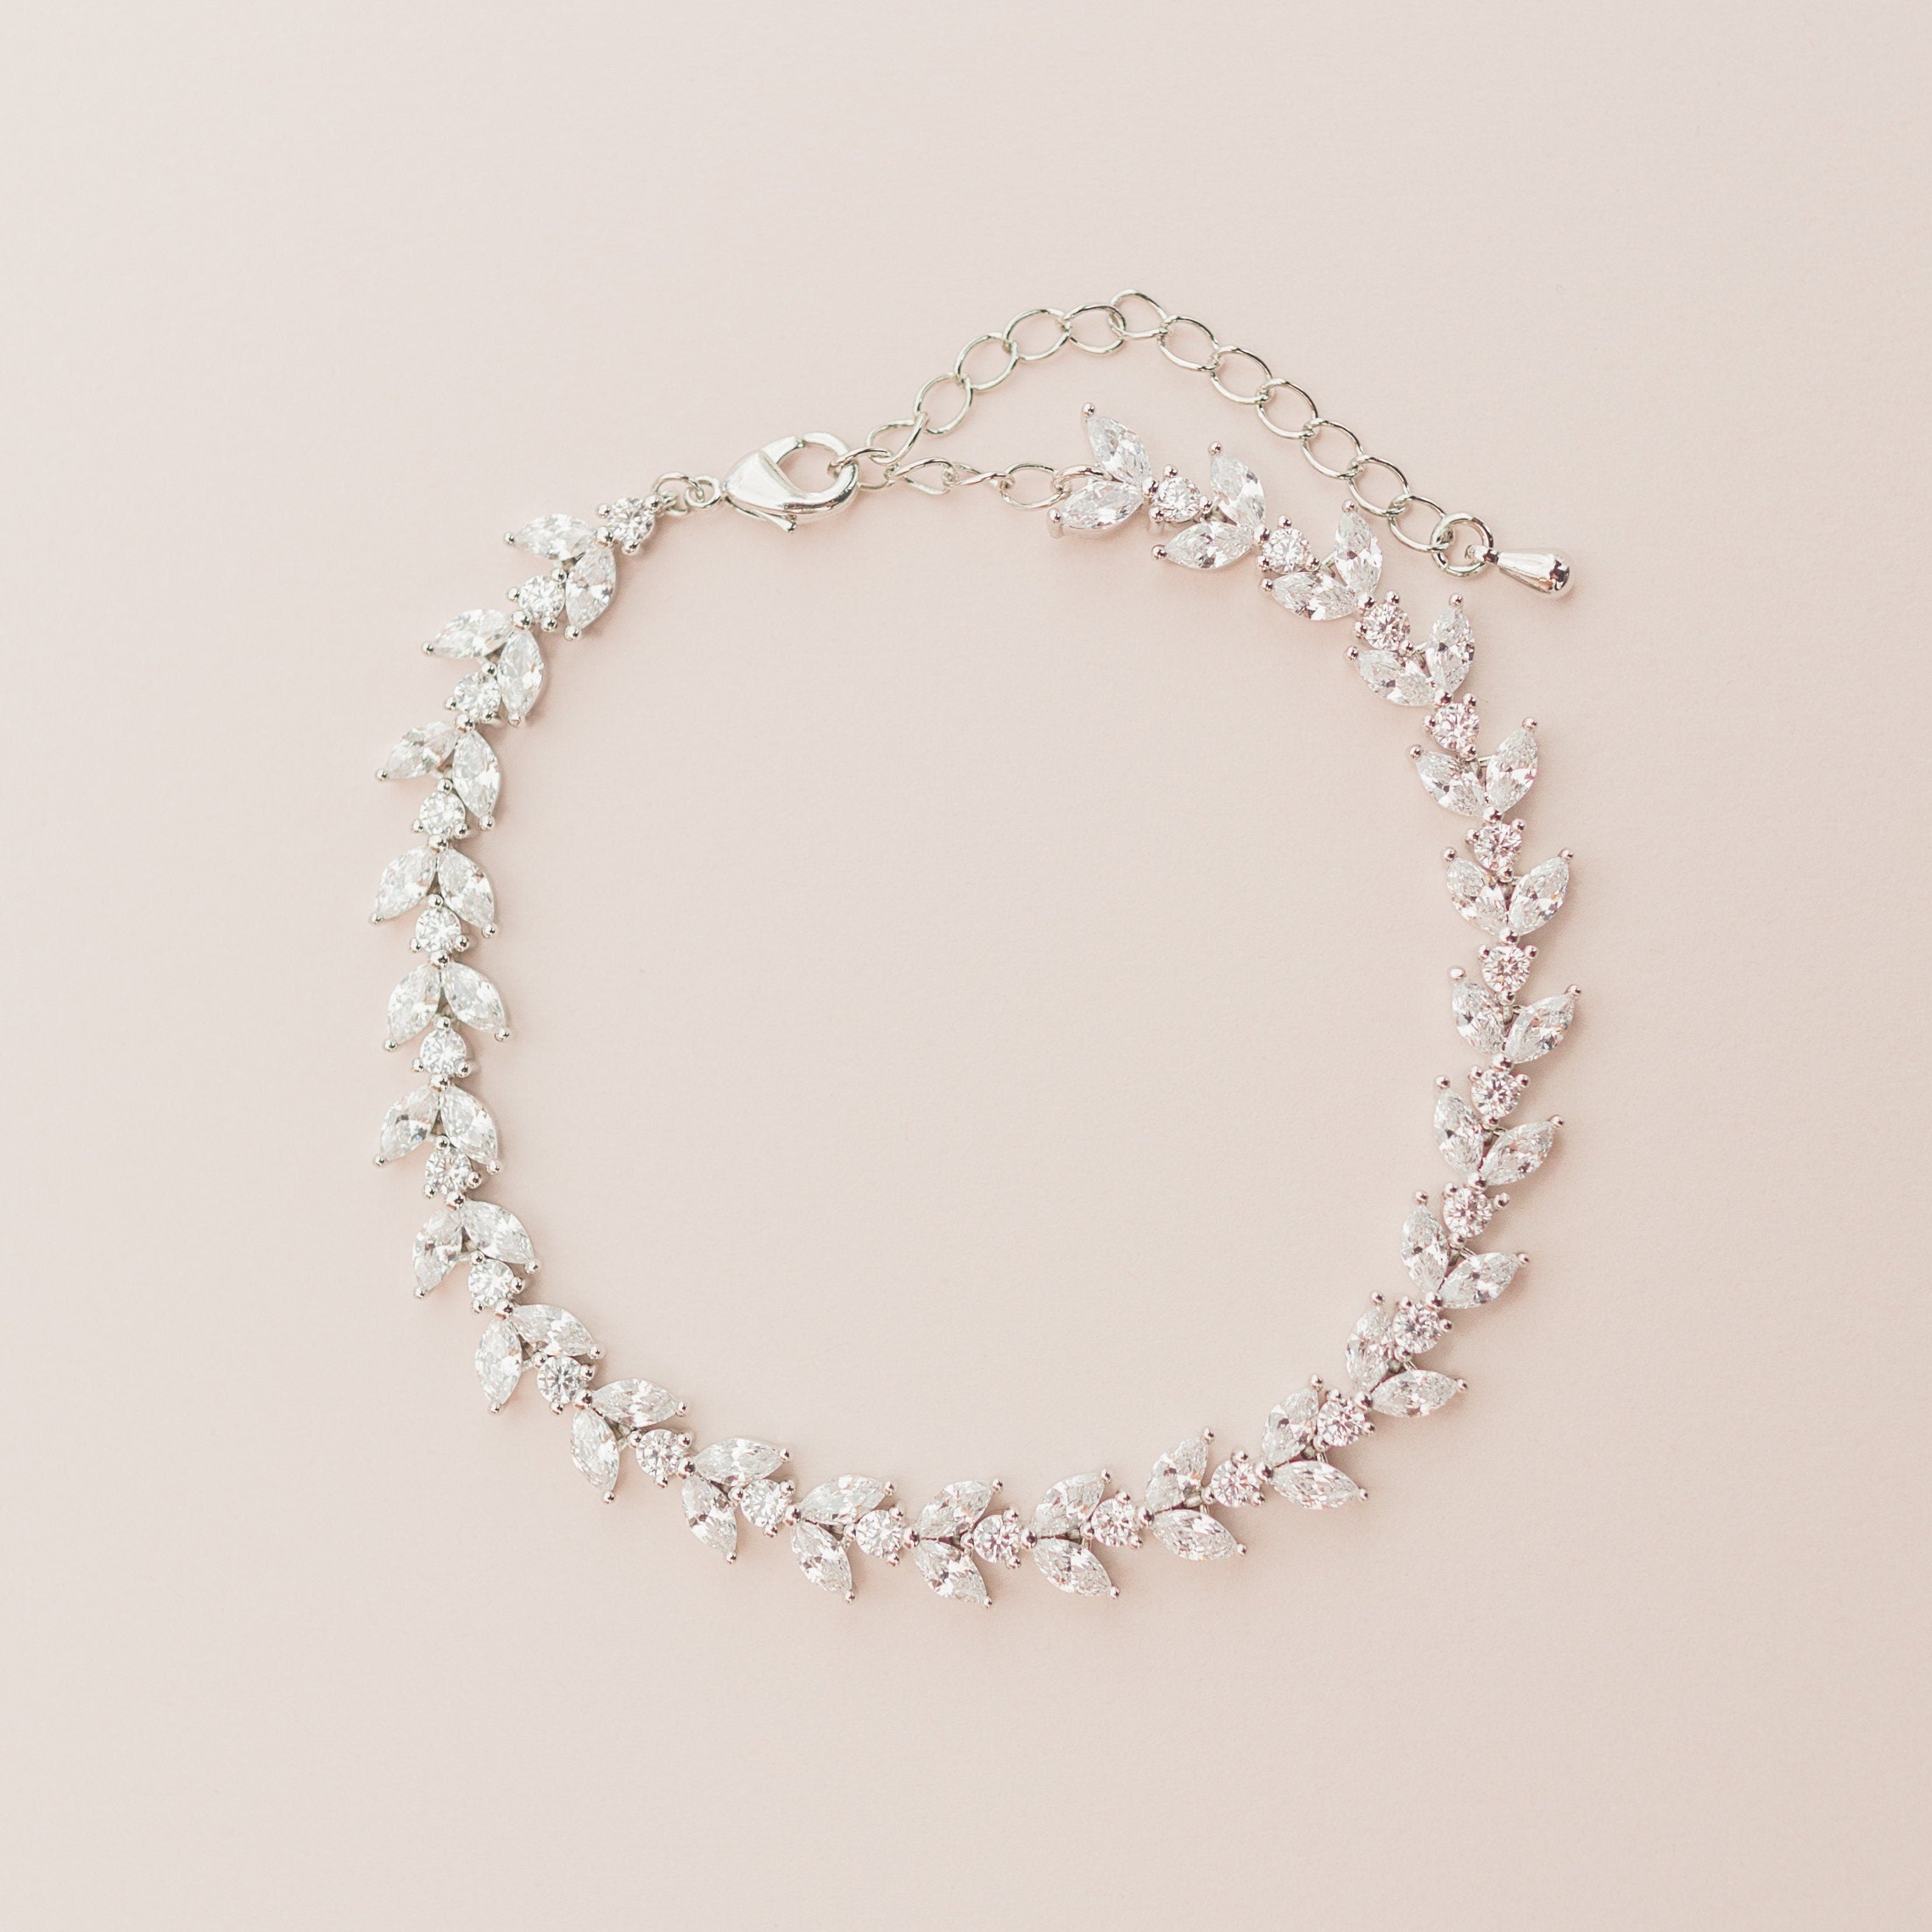 NORA // Silver bridal bracelet